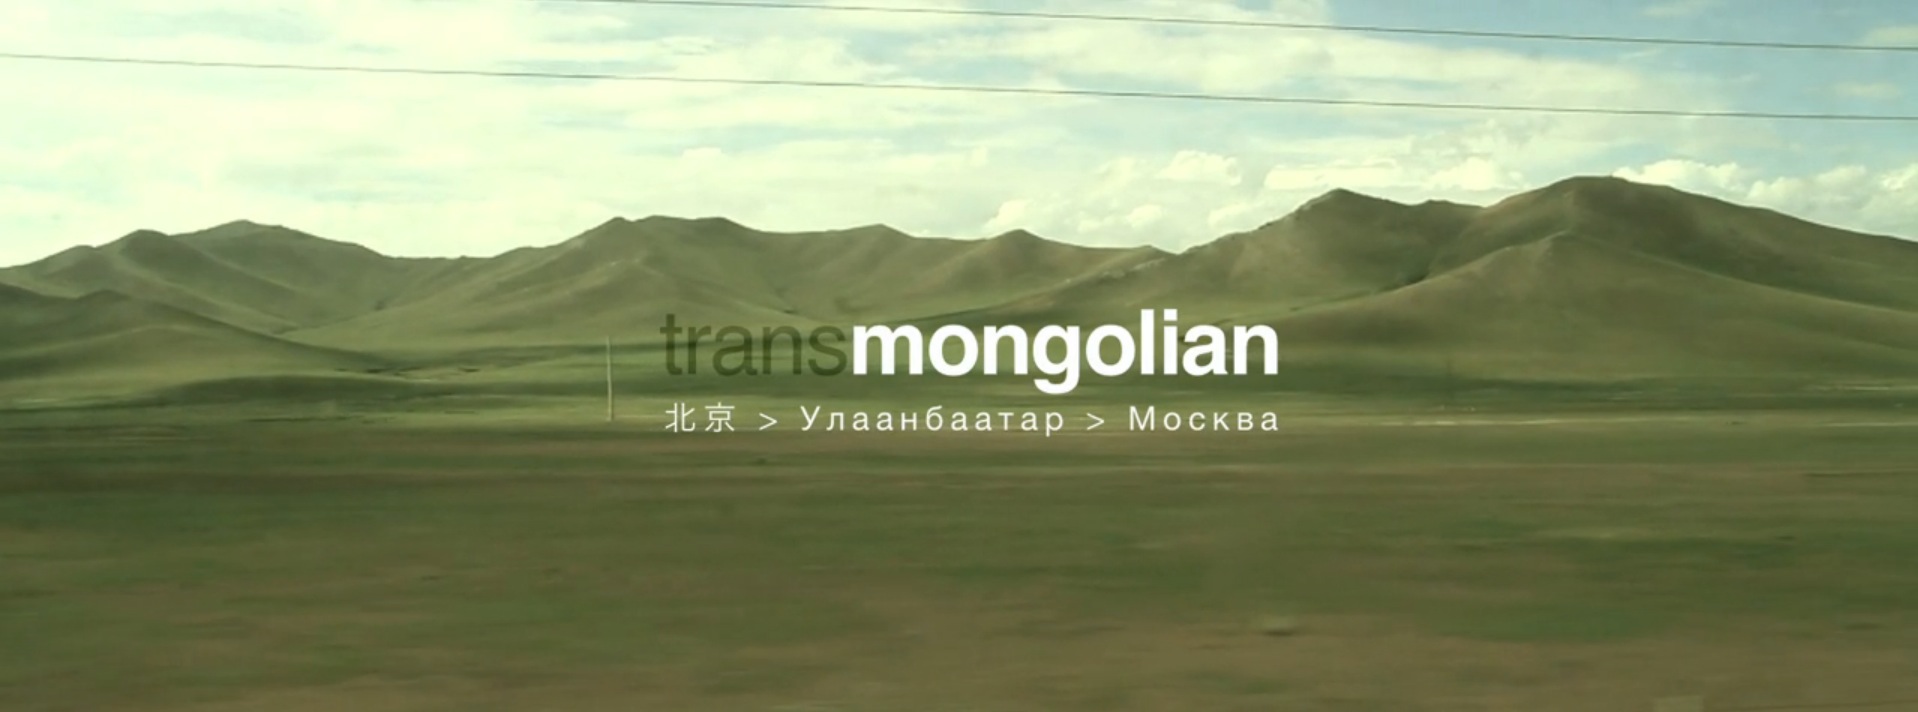 Trans-mongolian - A long train journey7